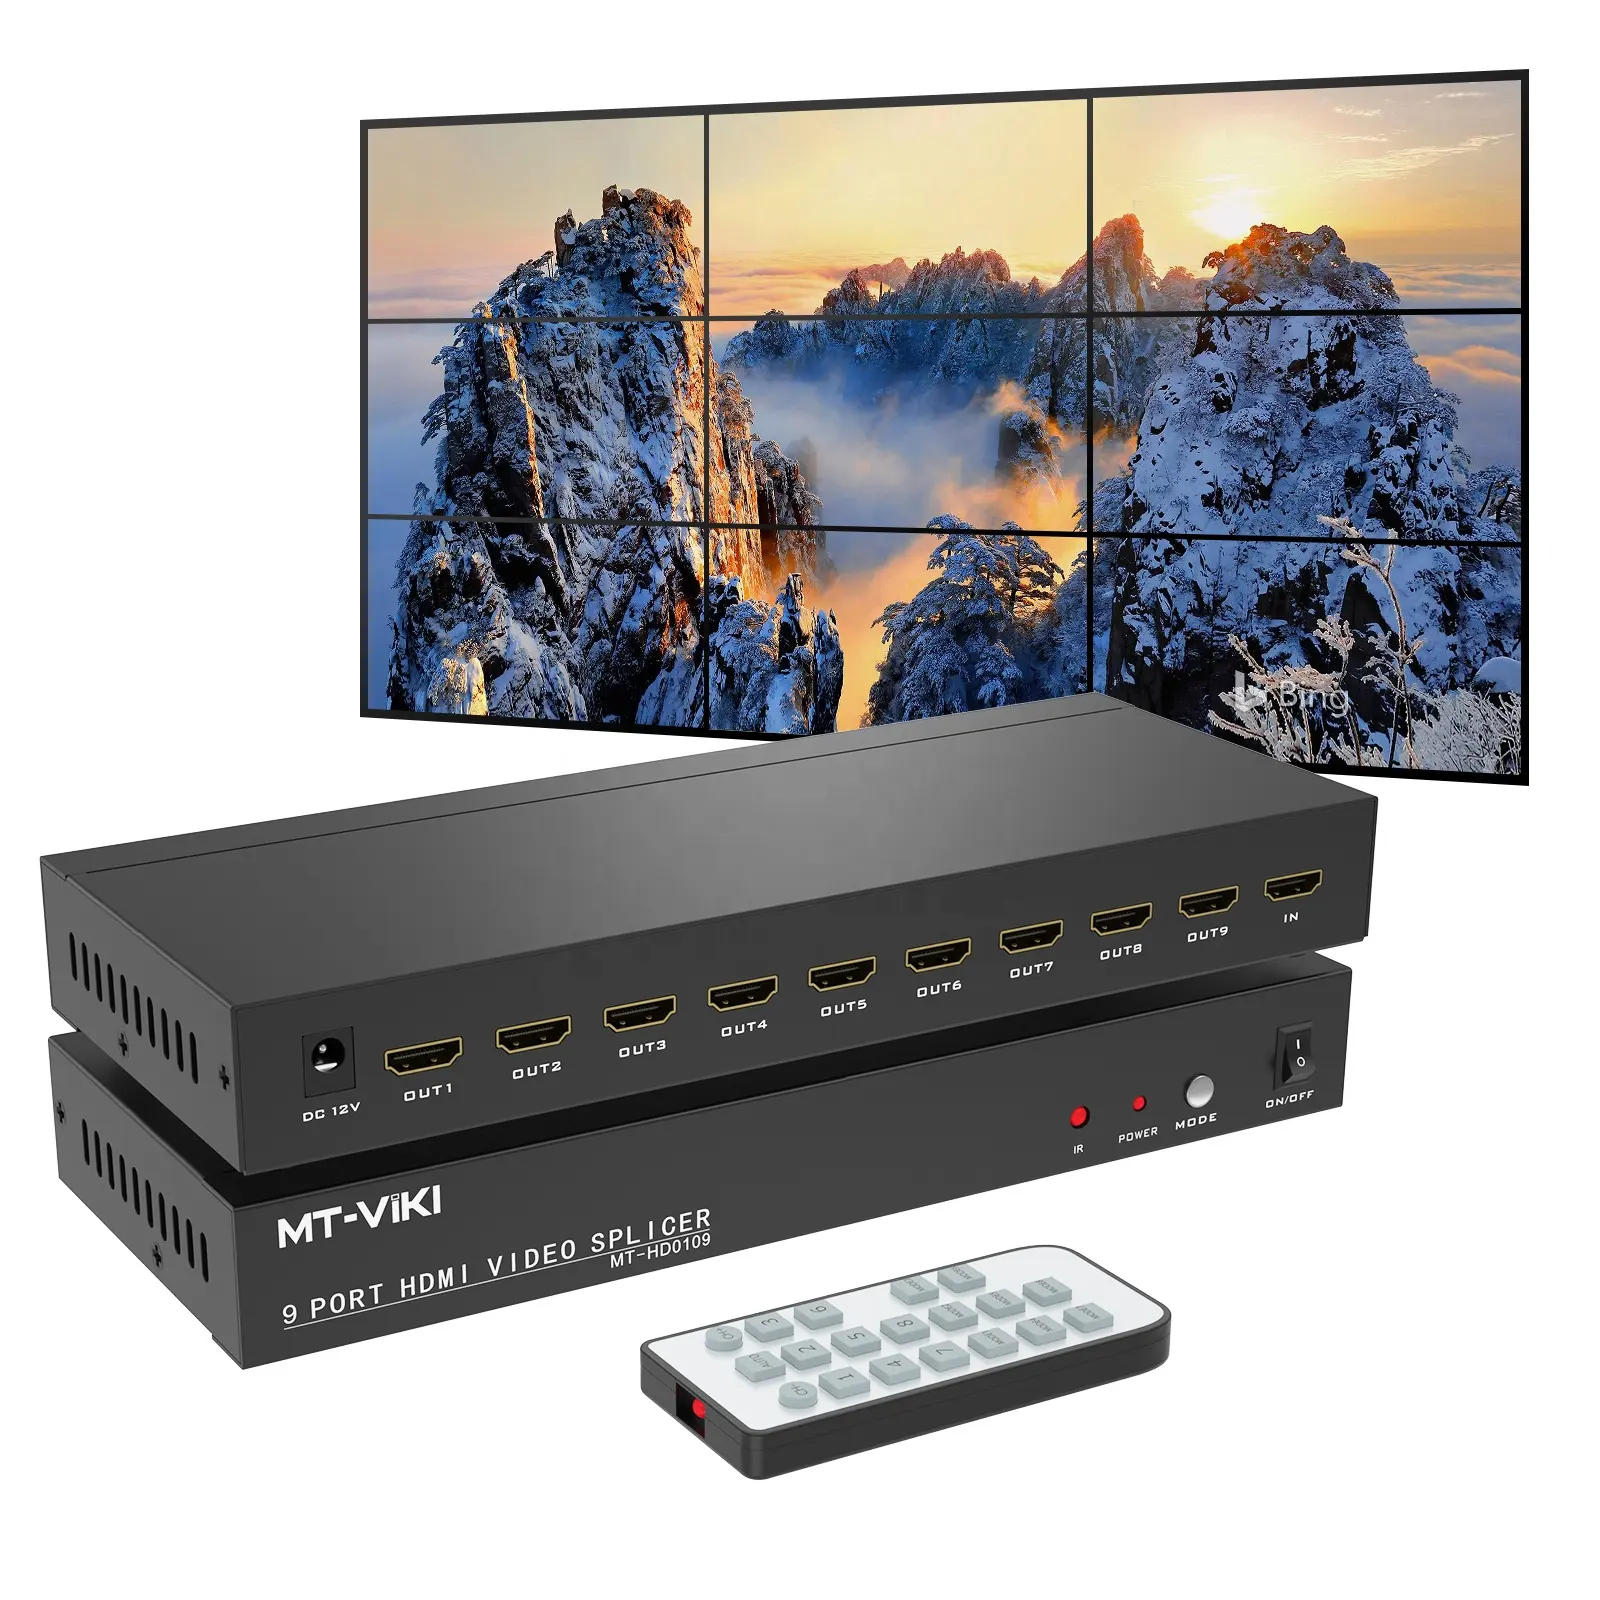 4K 30Hz HDMI Video Wall Controller 3x3, MT-VIKI 9 Port Multi viewer HDMI Video Wall Splicer 3x3 mit IR